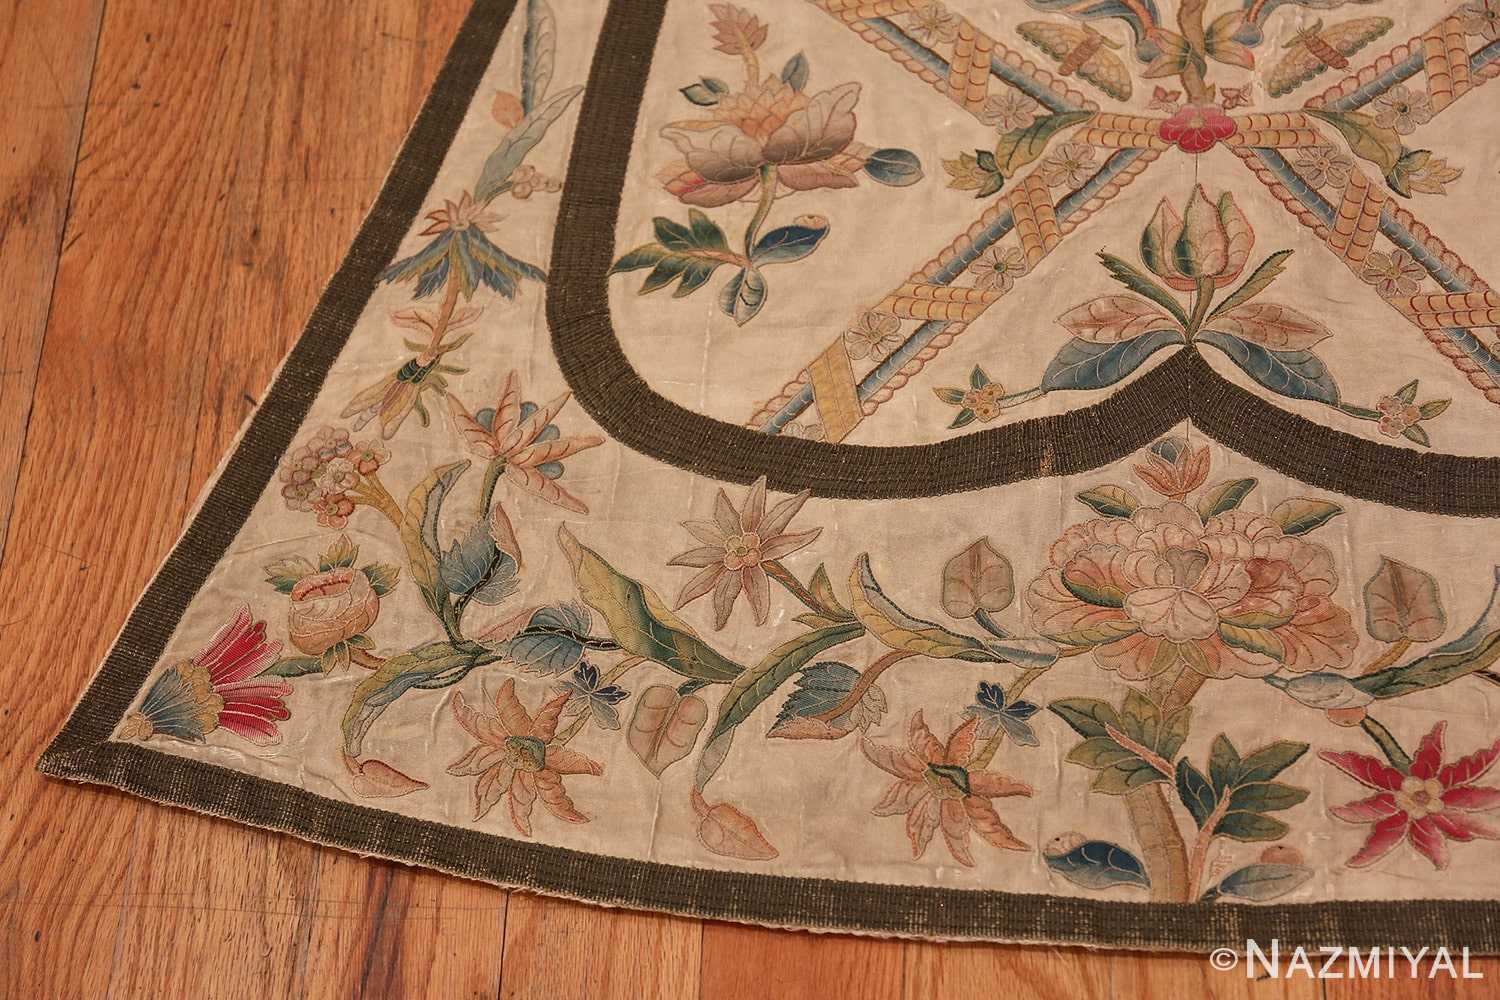 Corner Antique 18th century Dalmatic European textile 40450 by Nazmiyal